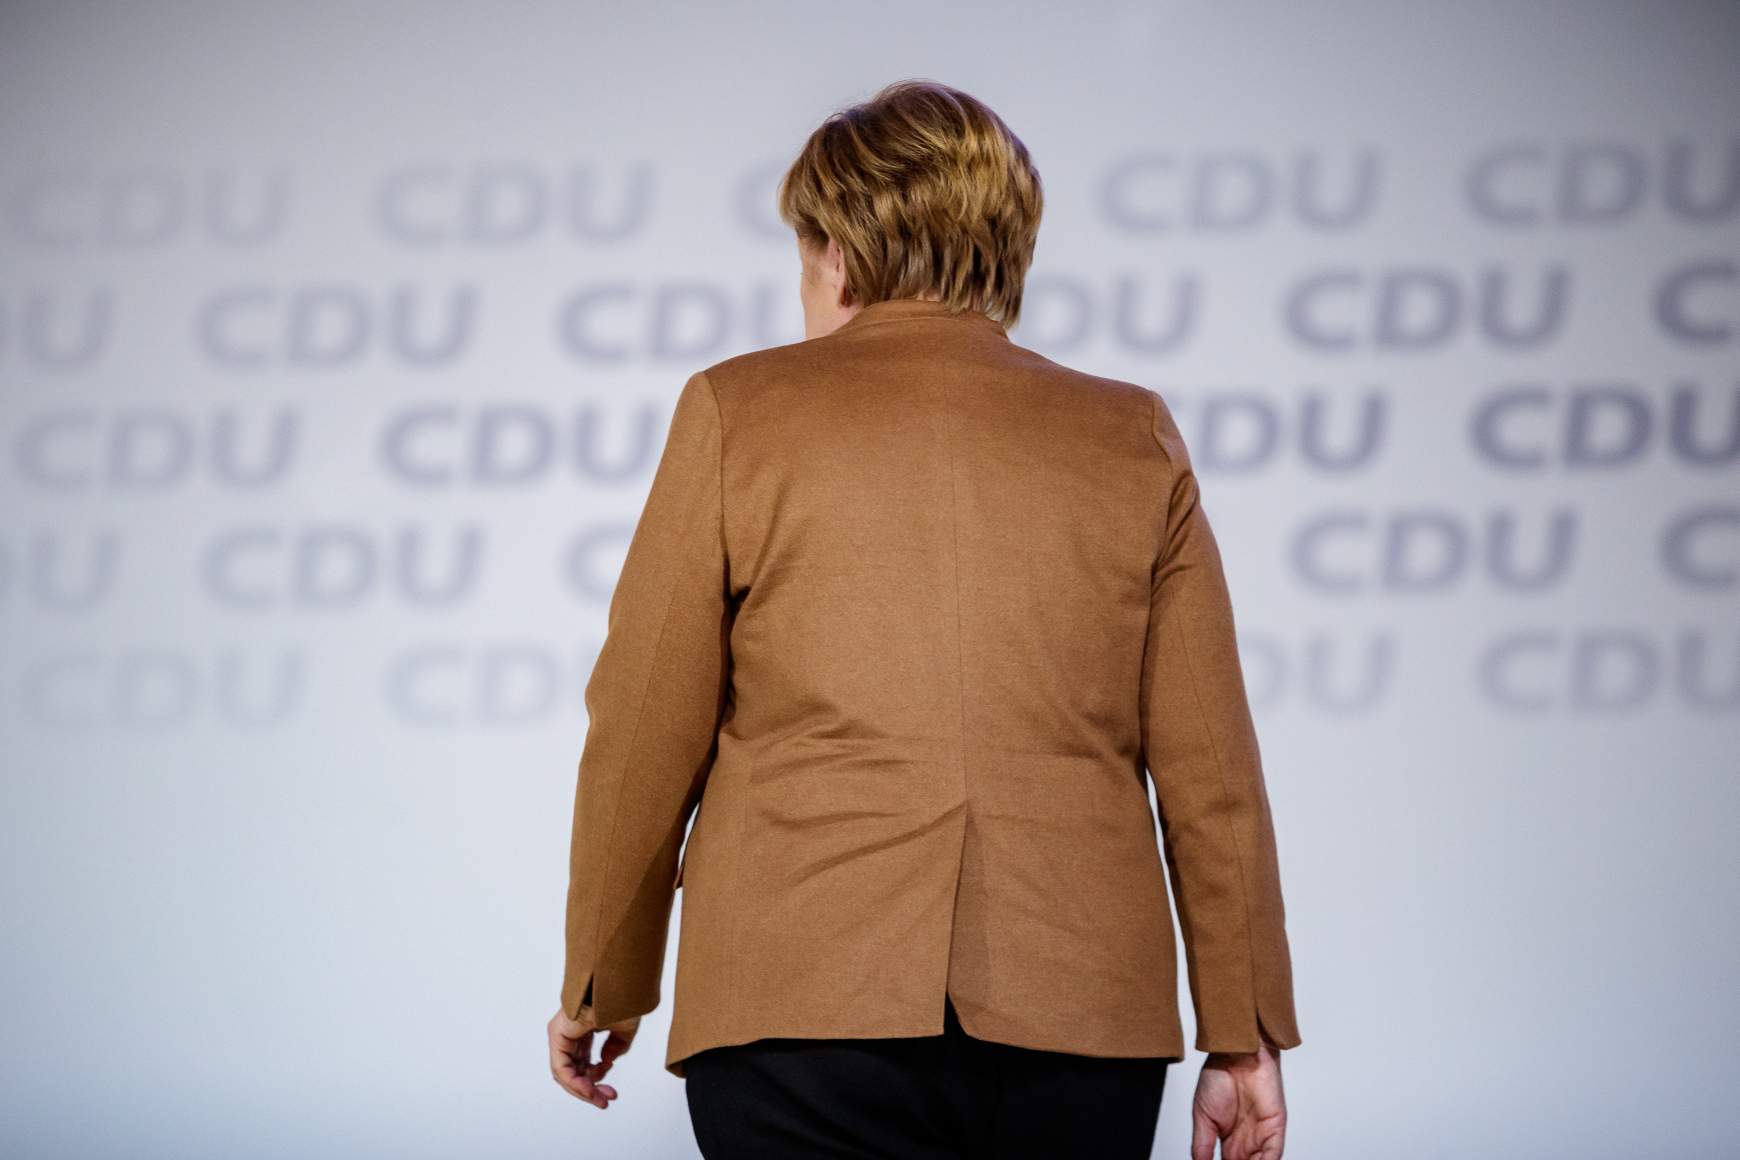 Angel Merkel CDU